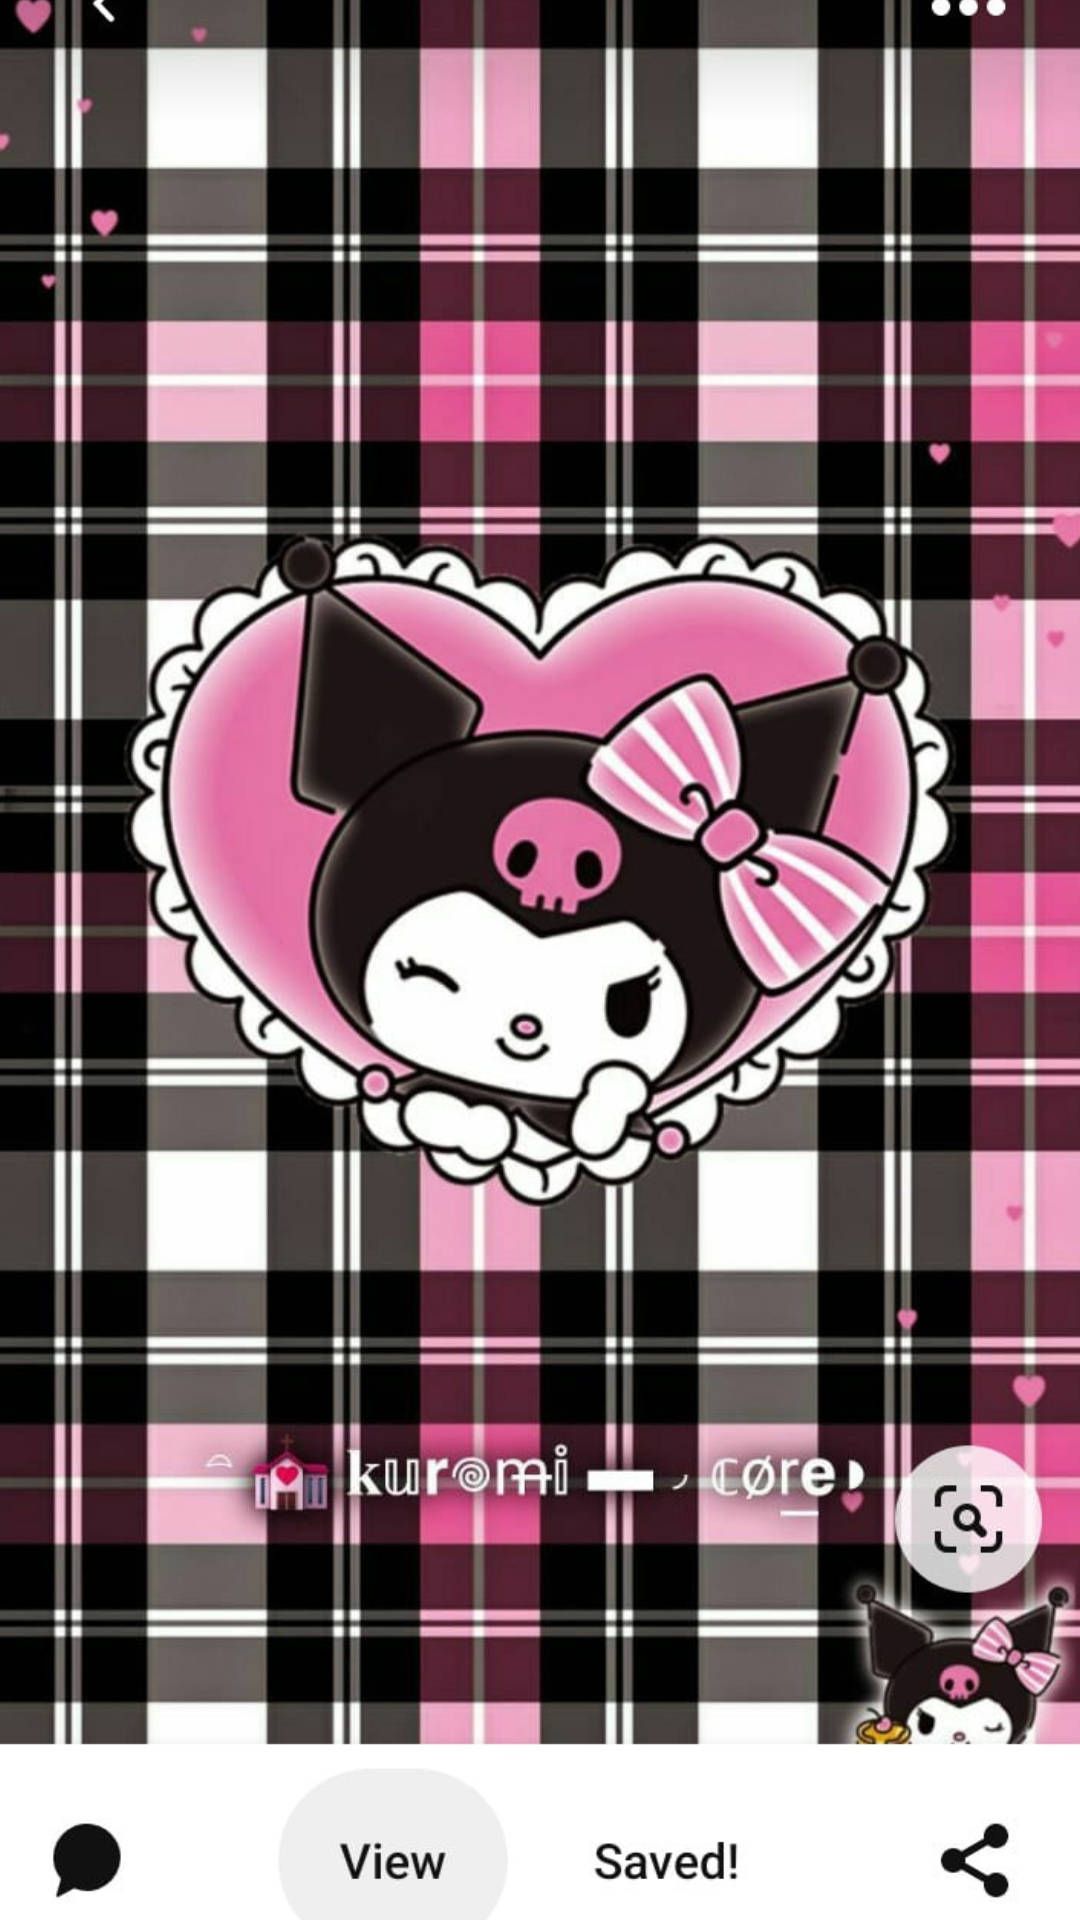 Kuromi live wallpaper I made for my phone! - Kuromi